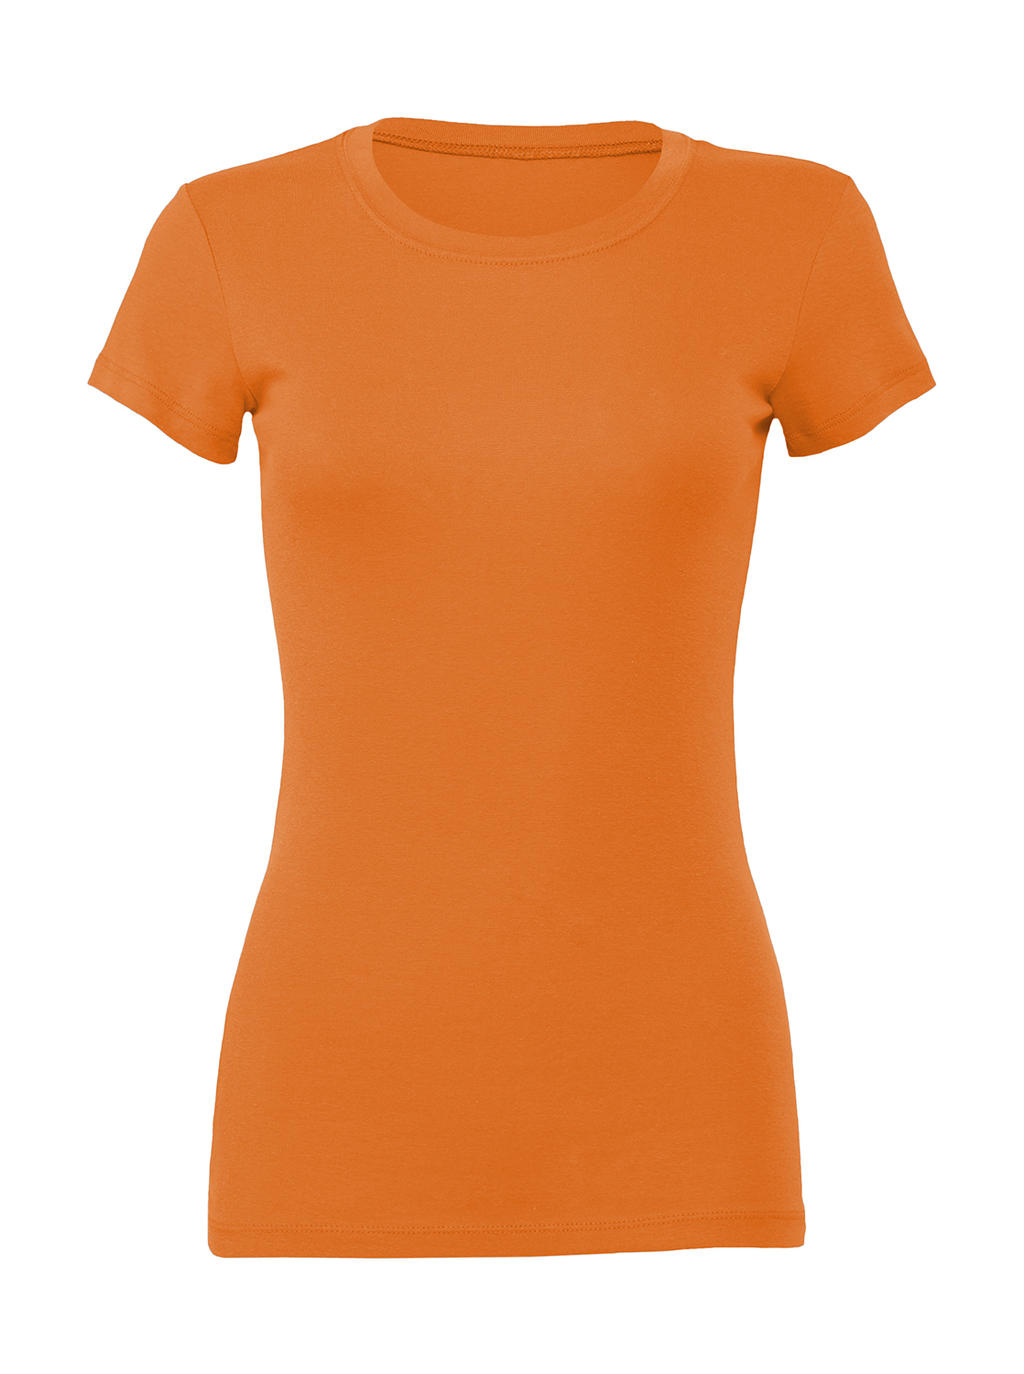  The Favorite T-Shirt in Farbe Orange